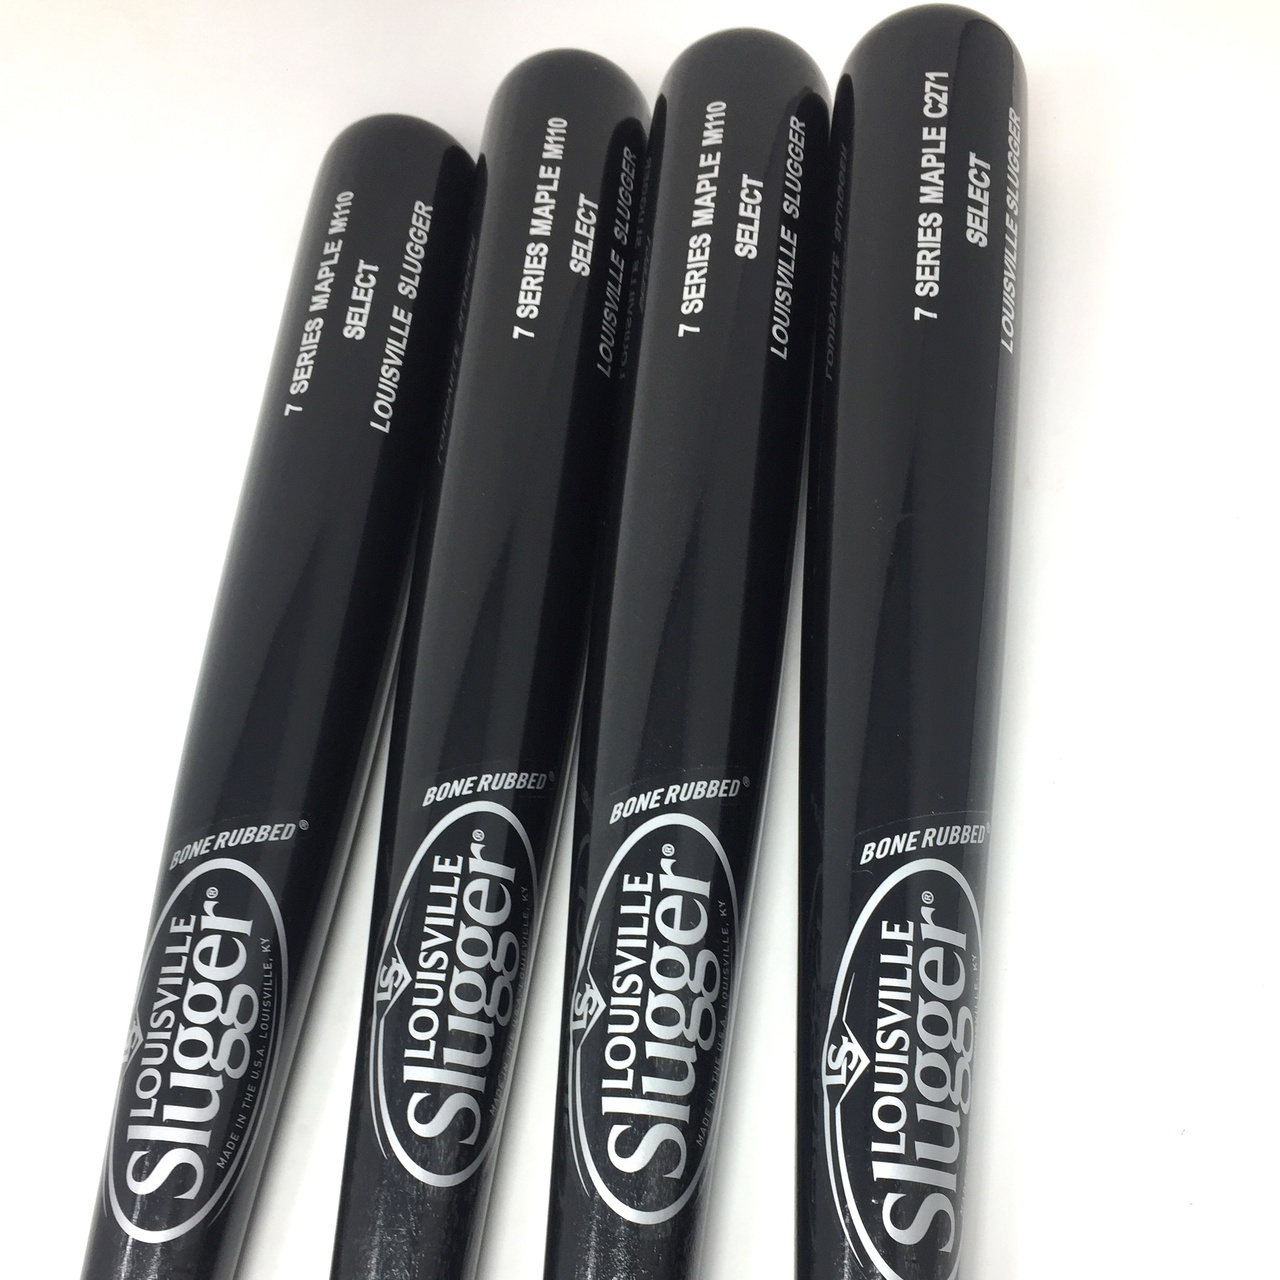 louisville-slugger-wood-baseball-bat-pack-34-inch-4-bats-series-7-maple-high-gloss-finish BATPACK-0010 Louisville Does not apply <p>34 Inch Series 7 Maple Wood Baseball Bats from Louisville Slugger.